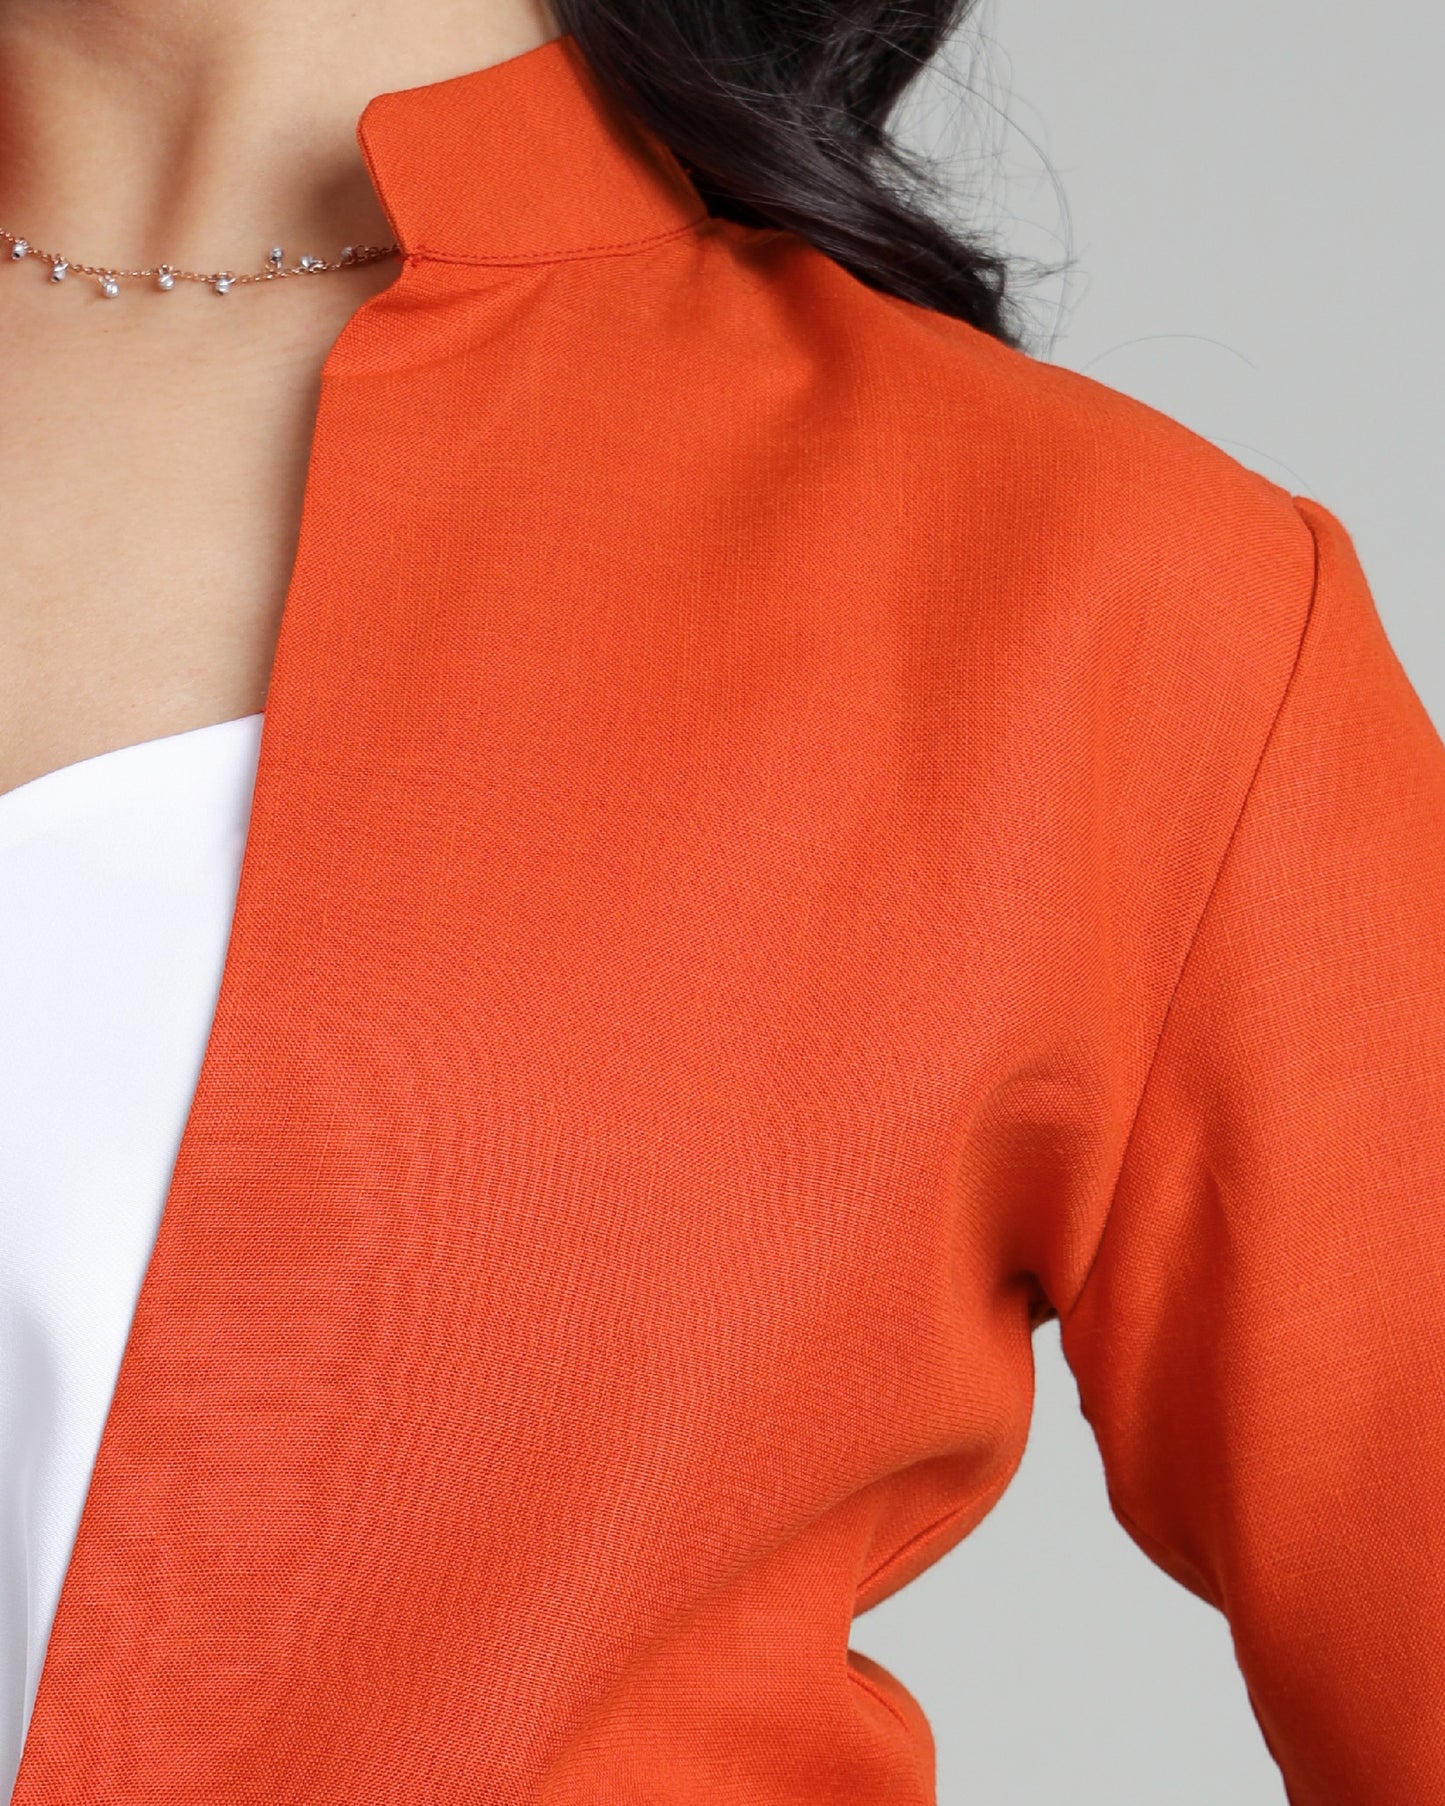 The Spark Of Inspiration Women's Orange Jacket